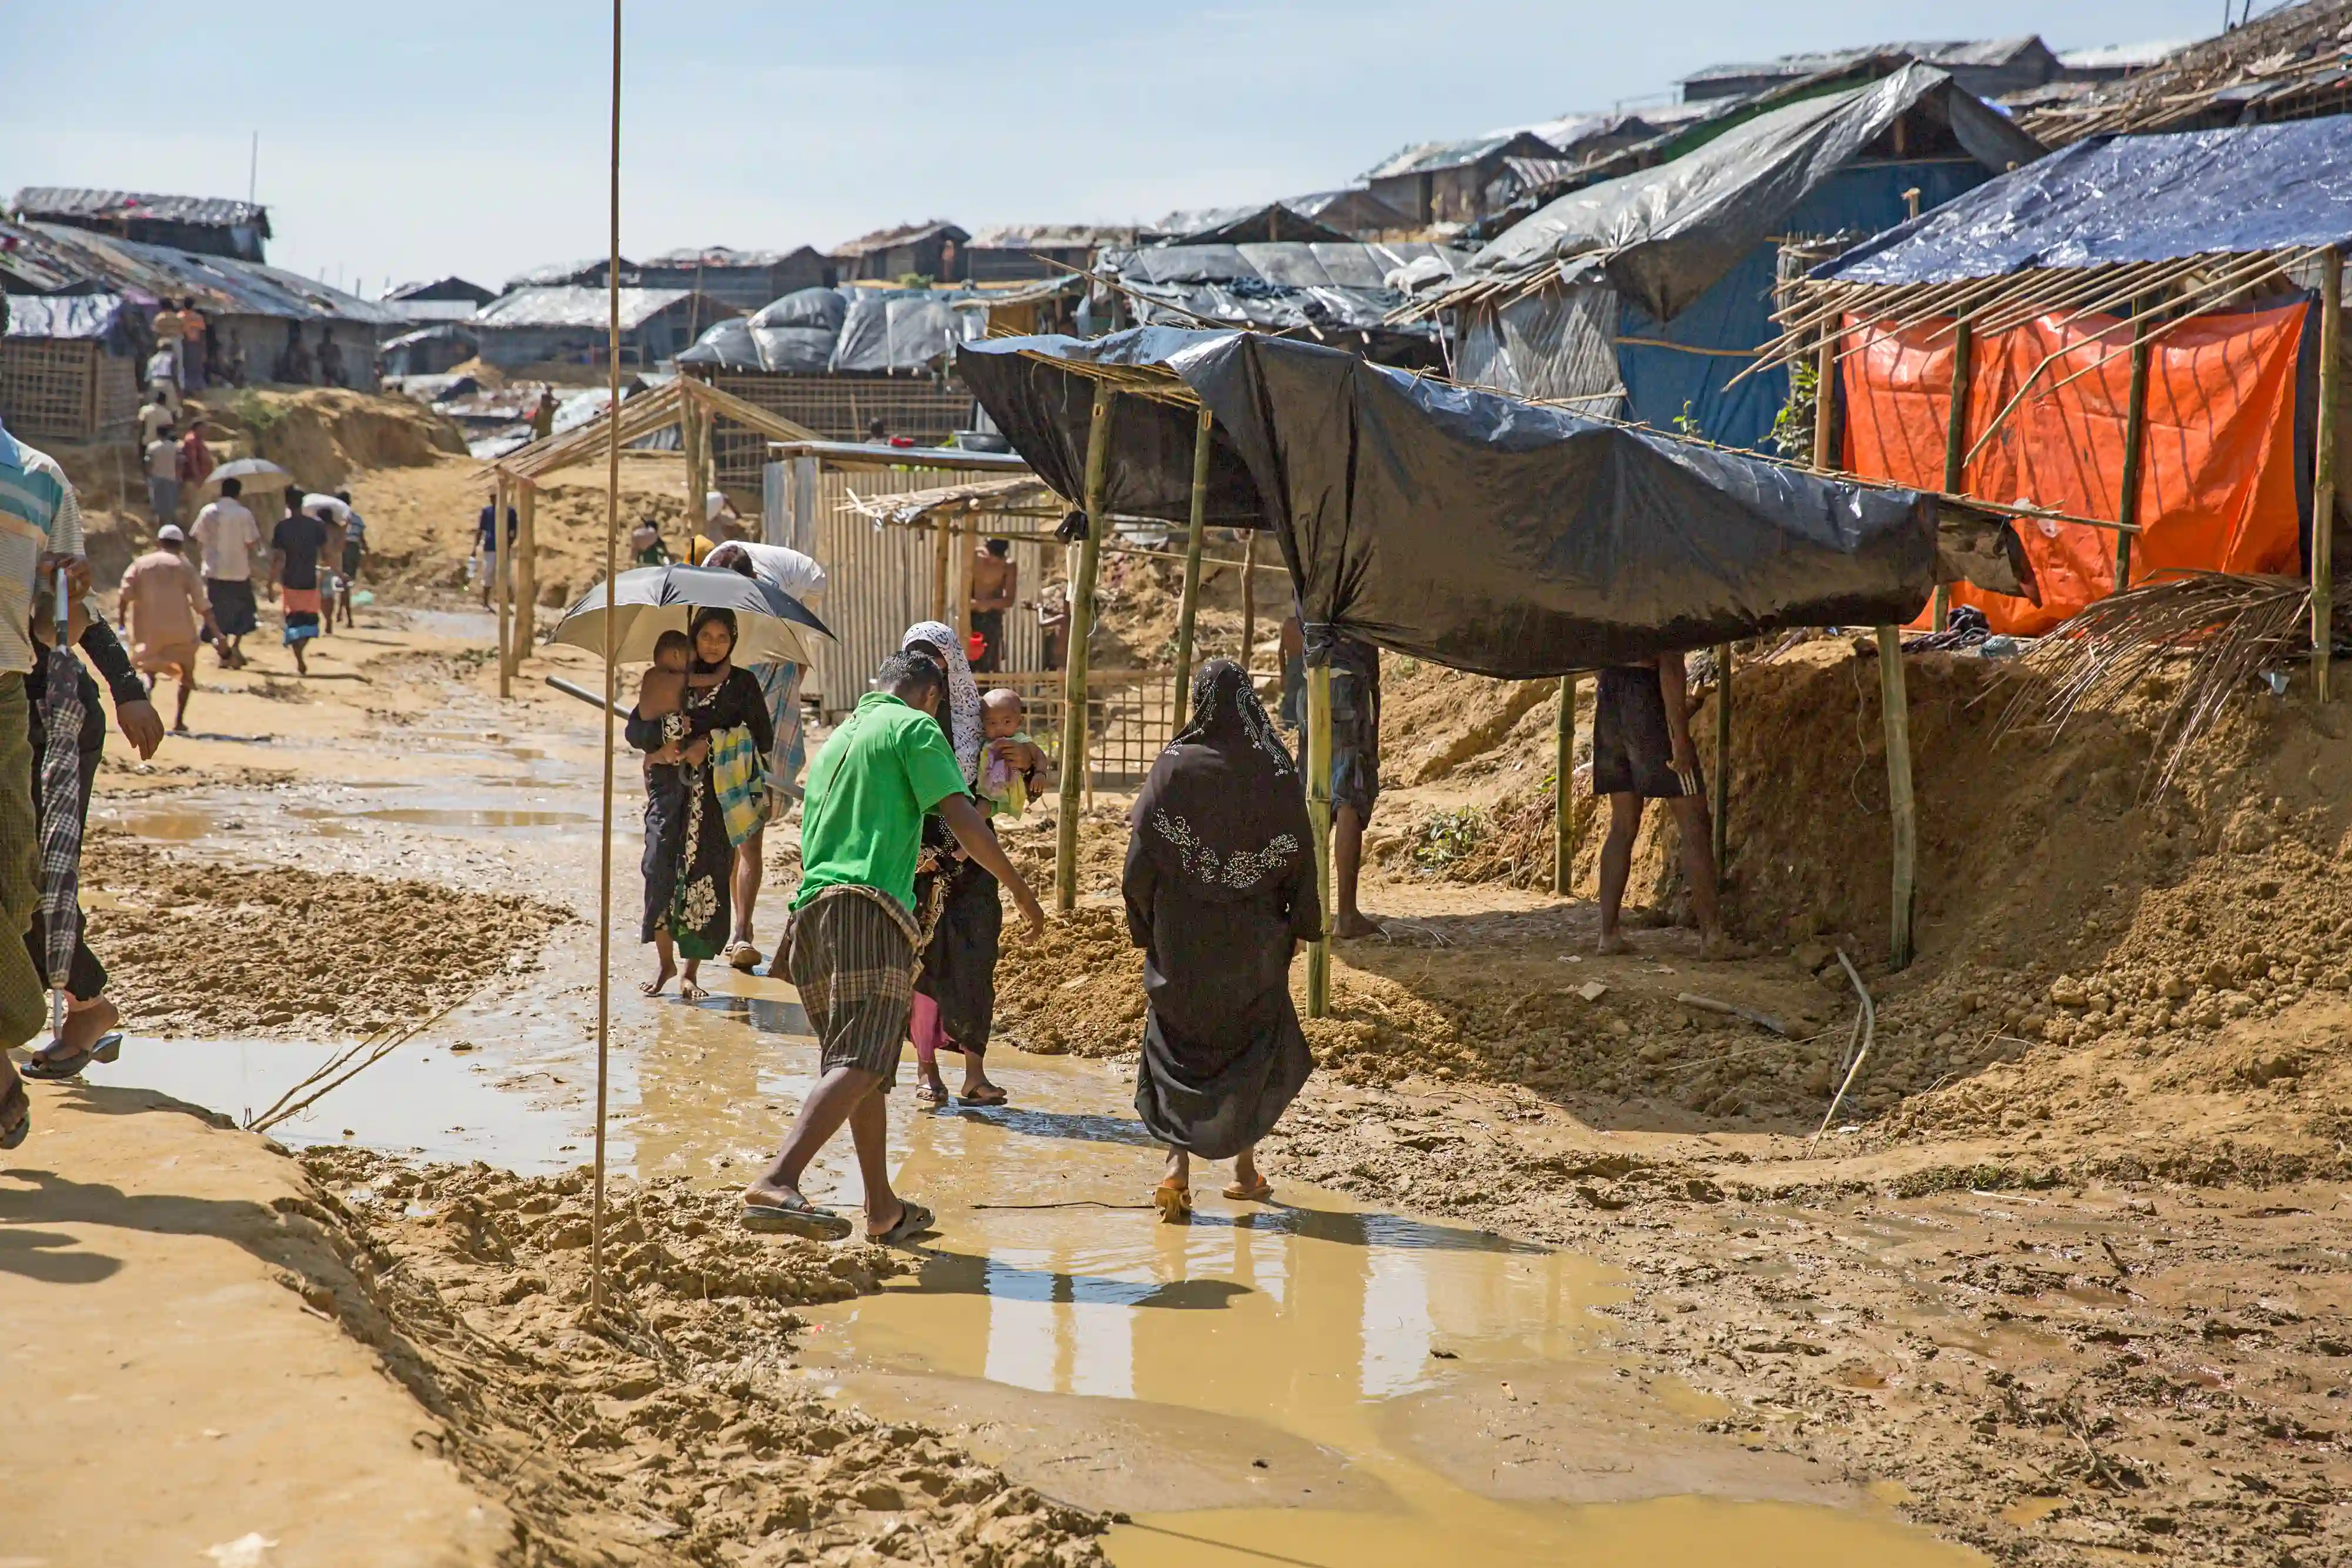 Moynardhona refugee camp in Cox’s Bazar, Bangladesh, during monsoon season.